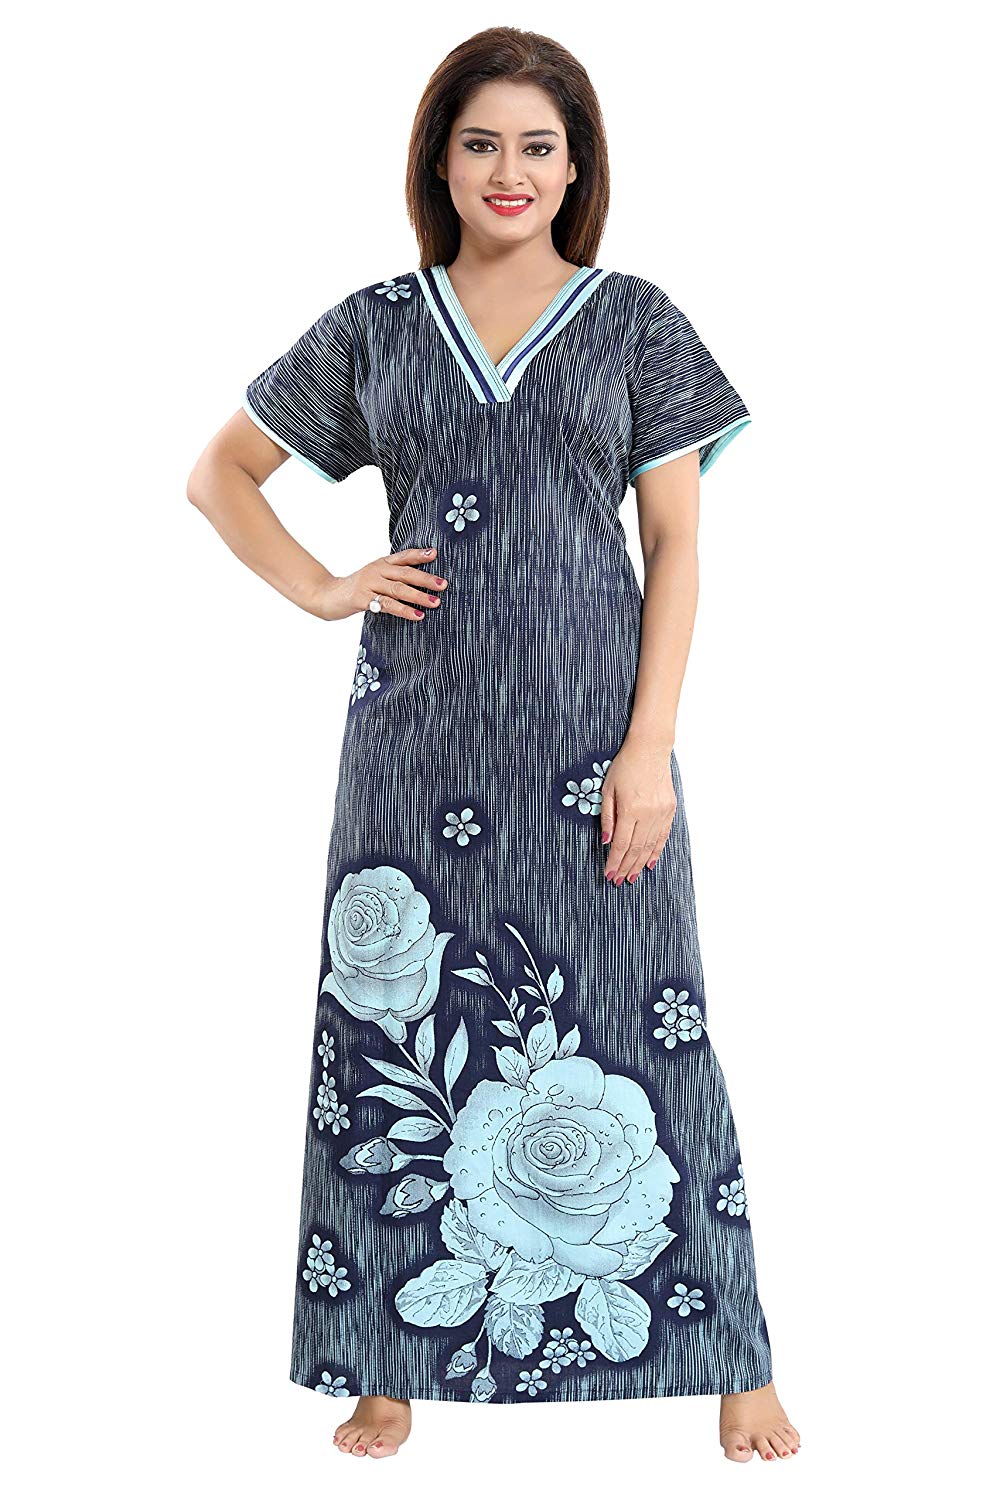 Plus Size Women Lingerie Nightgown Sleepwear Night Dress Chemise Nighty -  Walmart.com